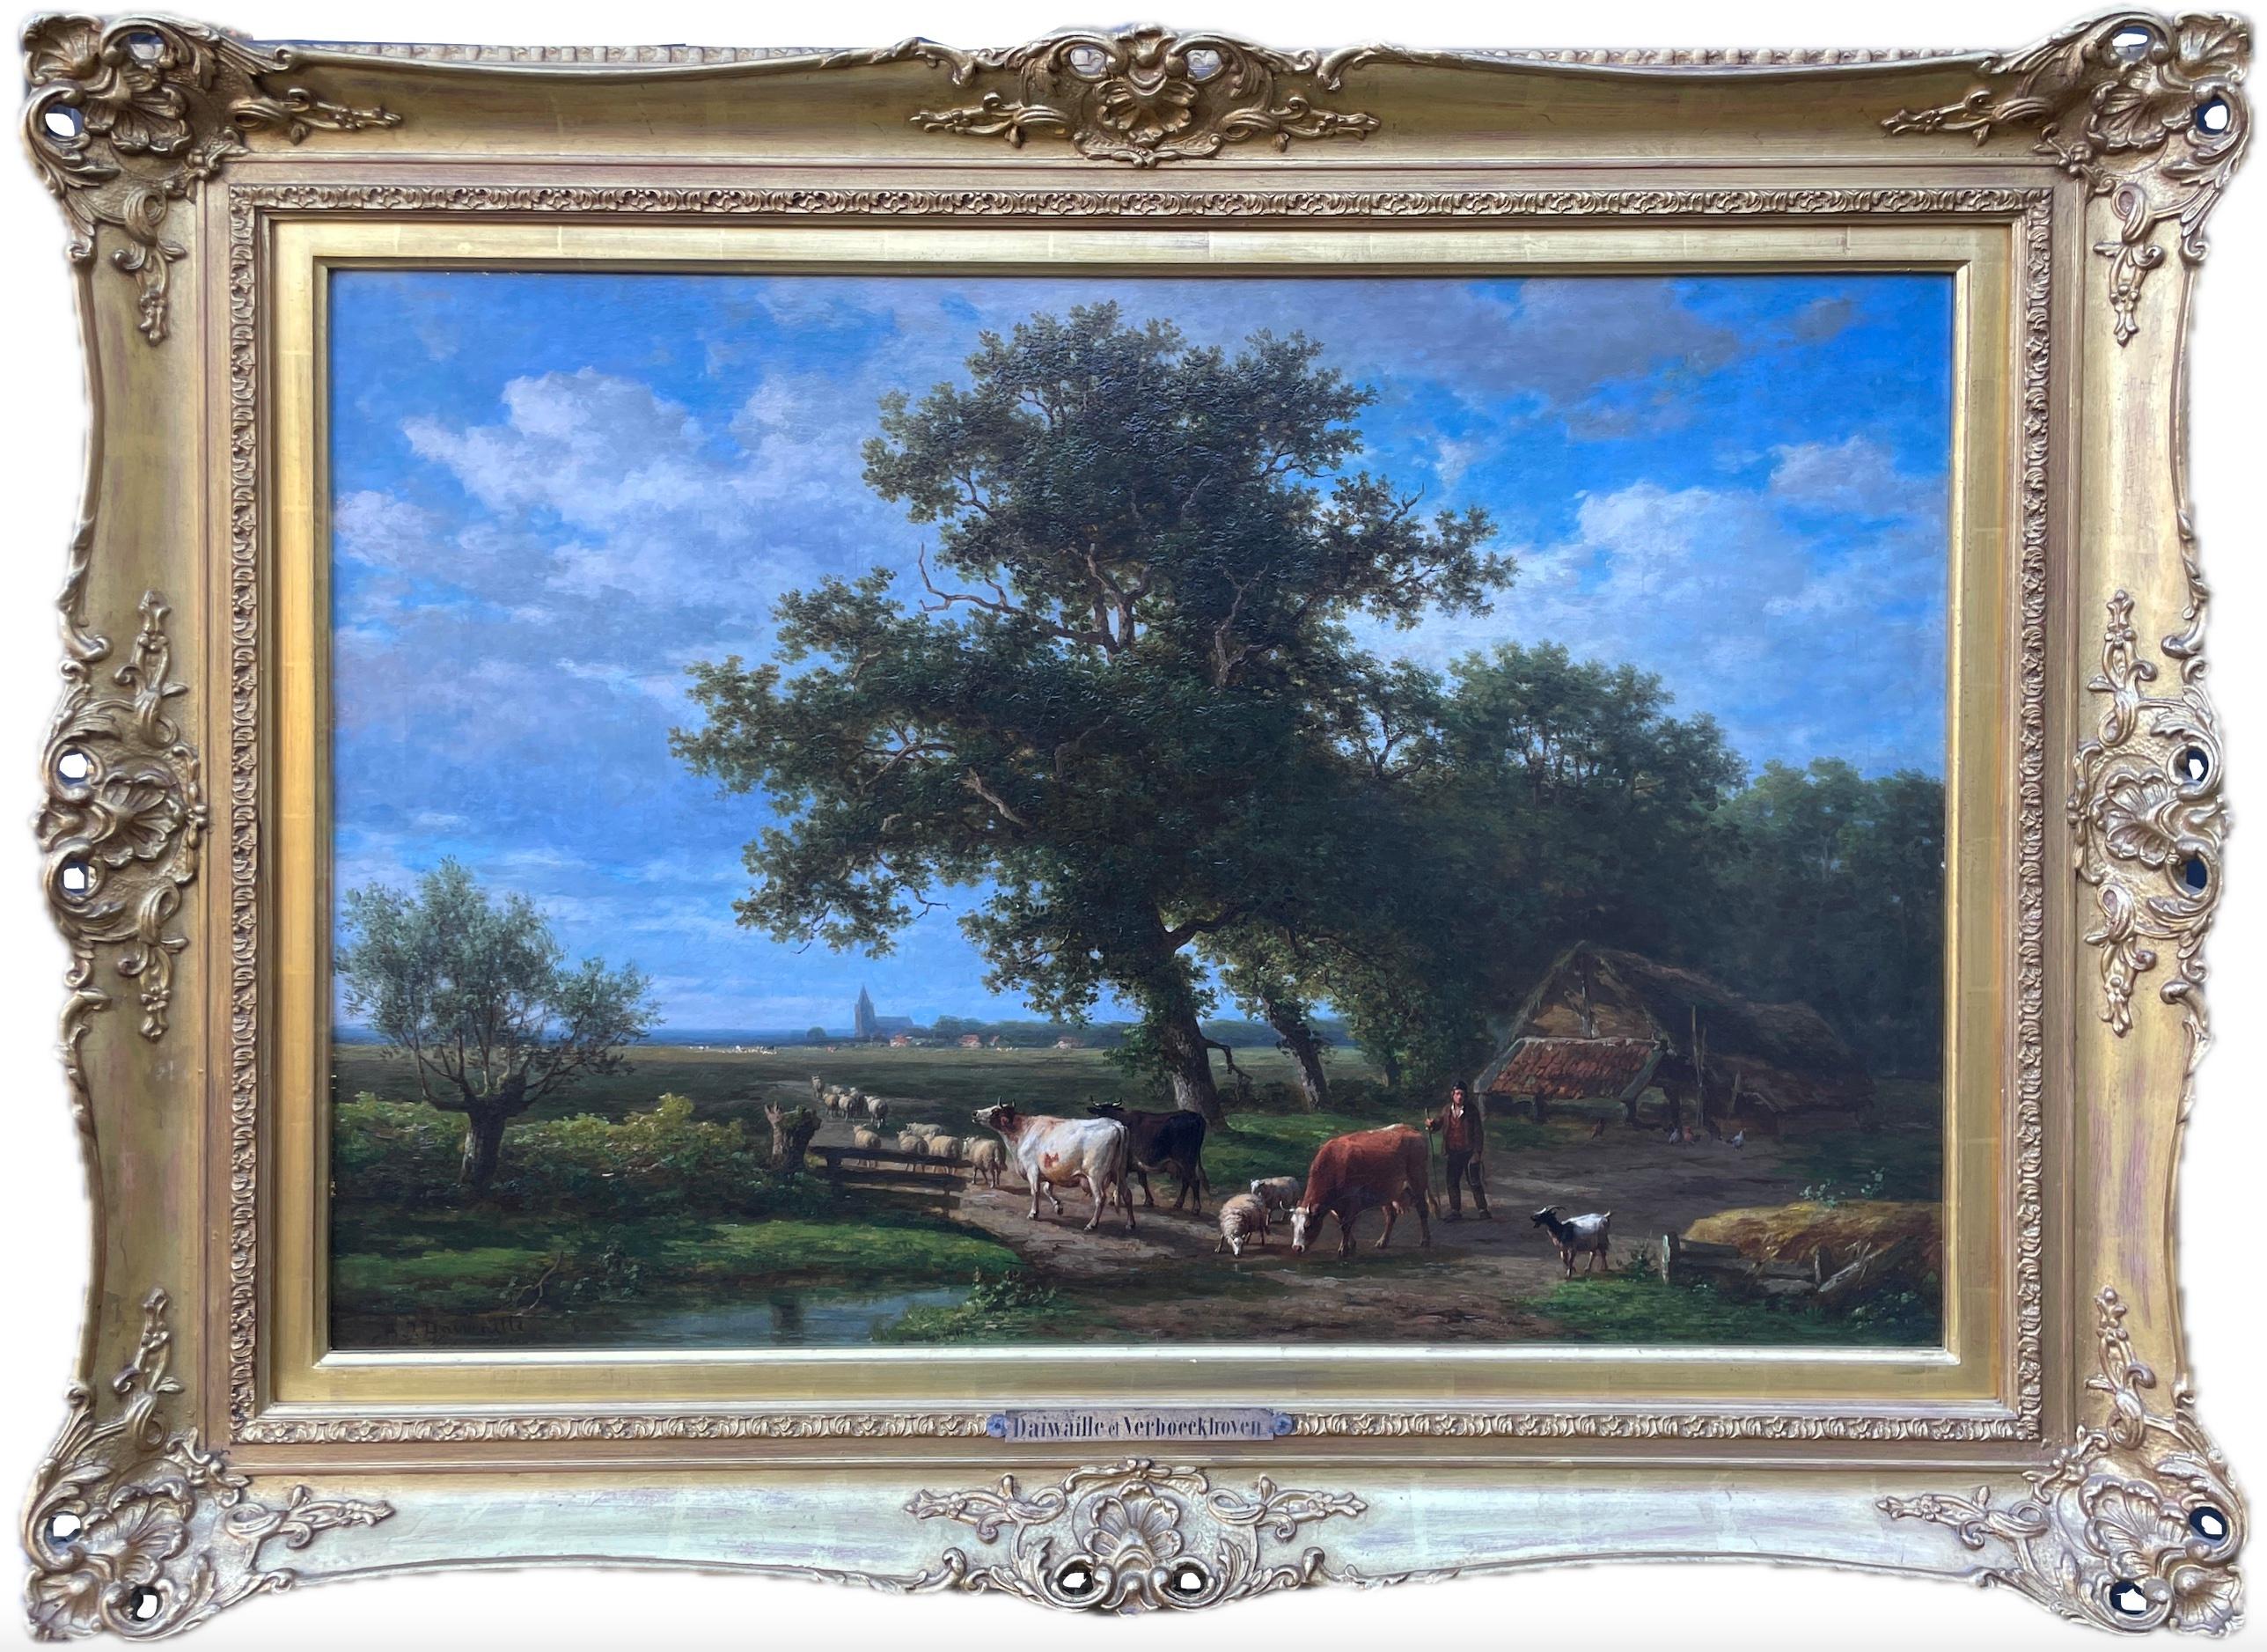 Oil on canvas by Eugene Verboeckhoven & Alexander Daiwaille (1796-1881)